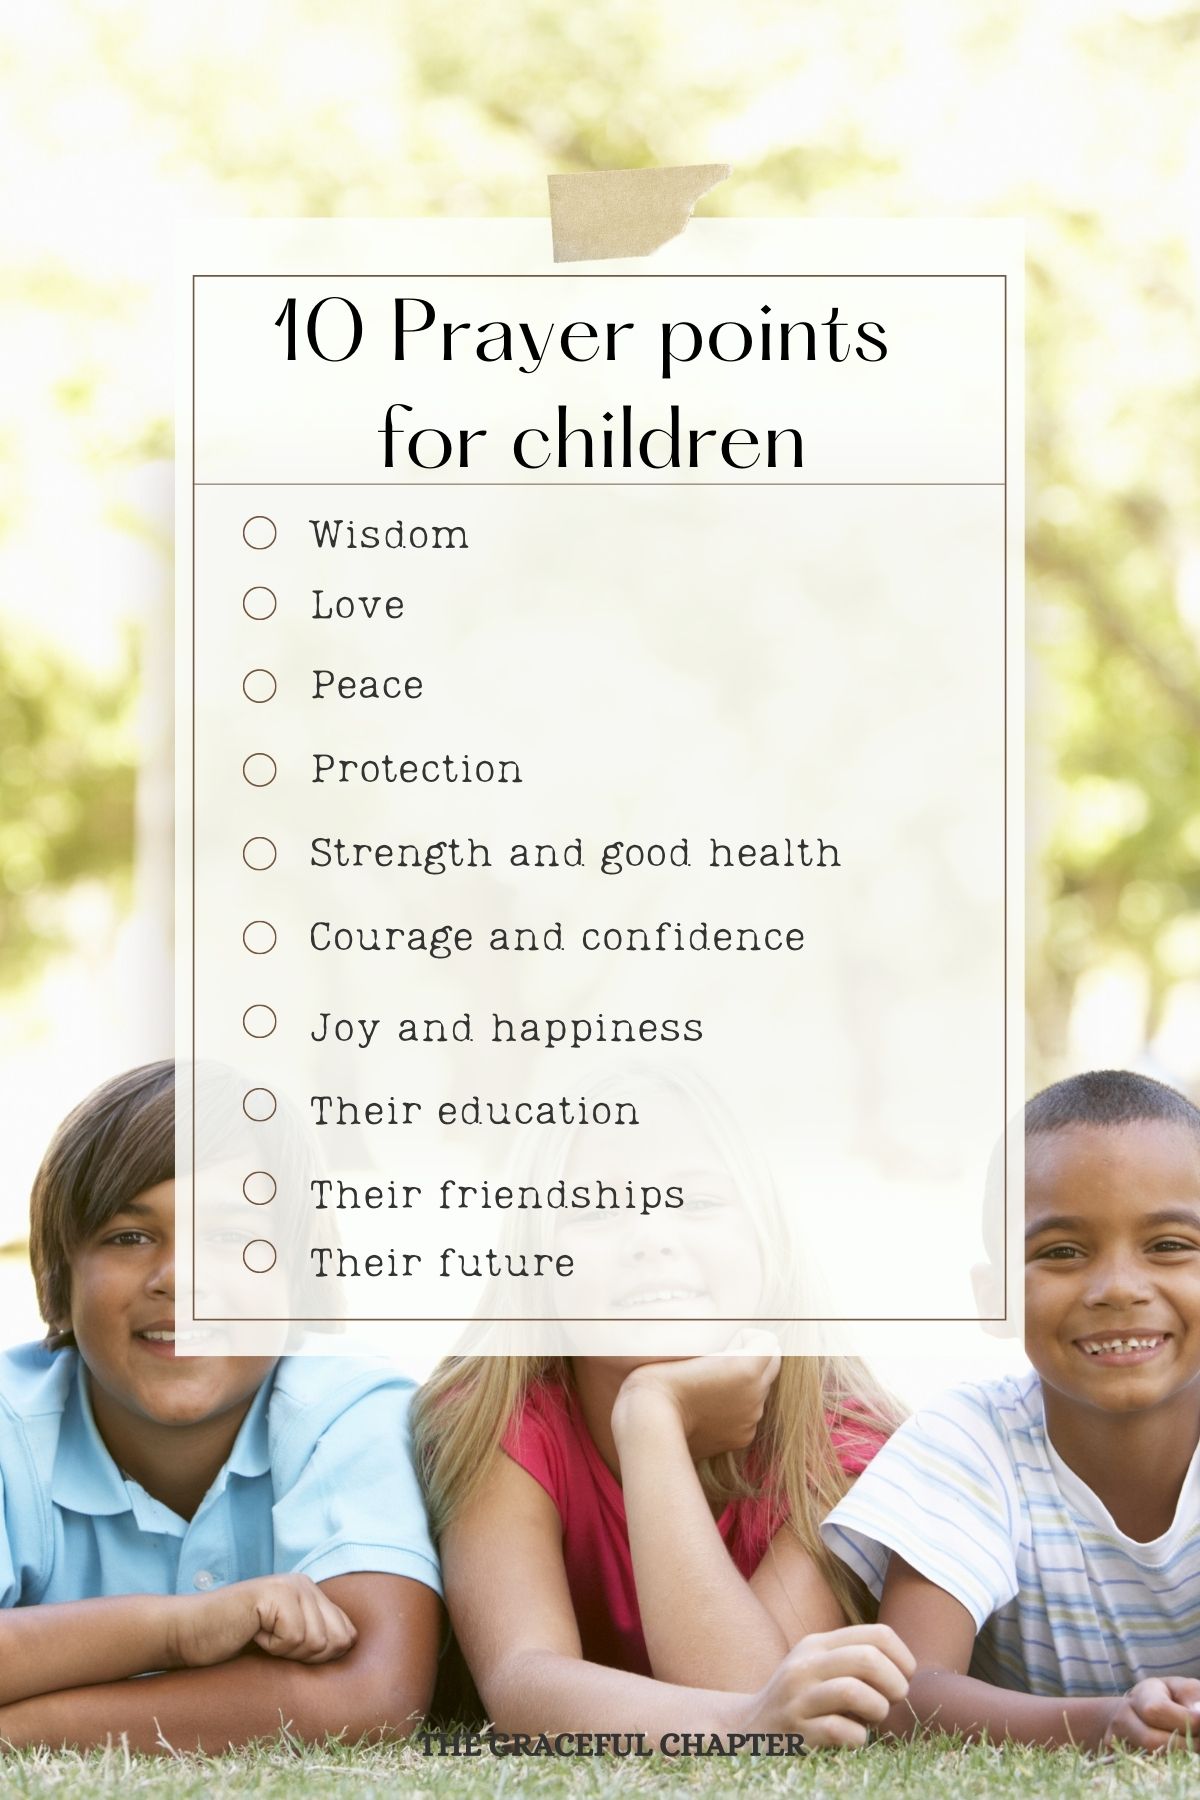 10 prayer points for children